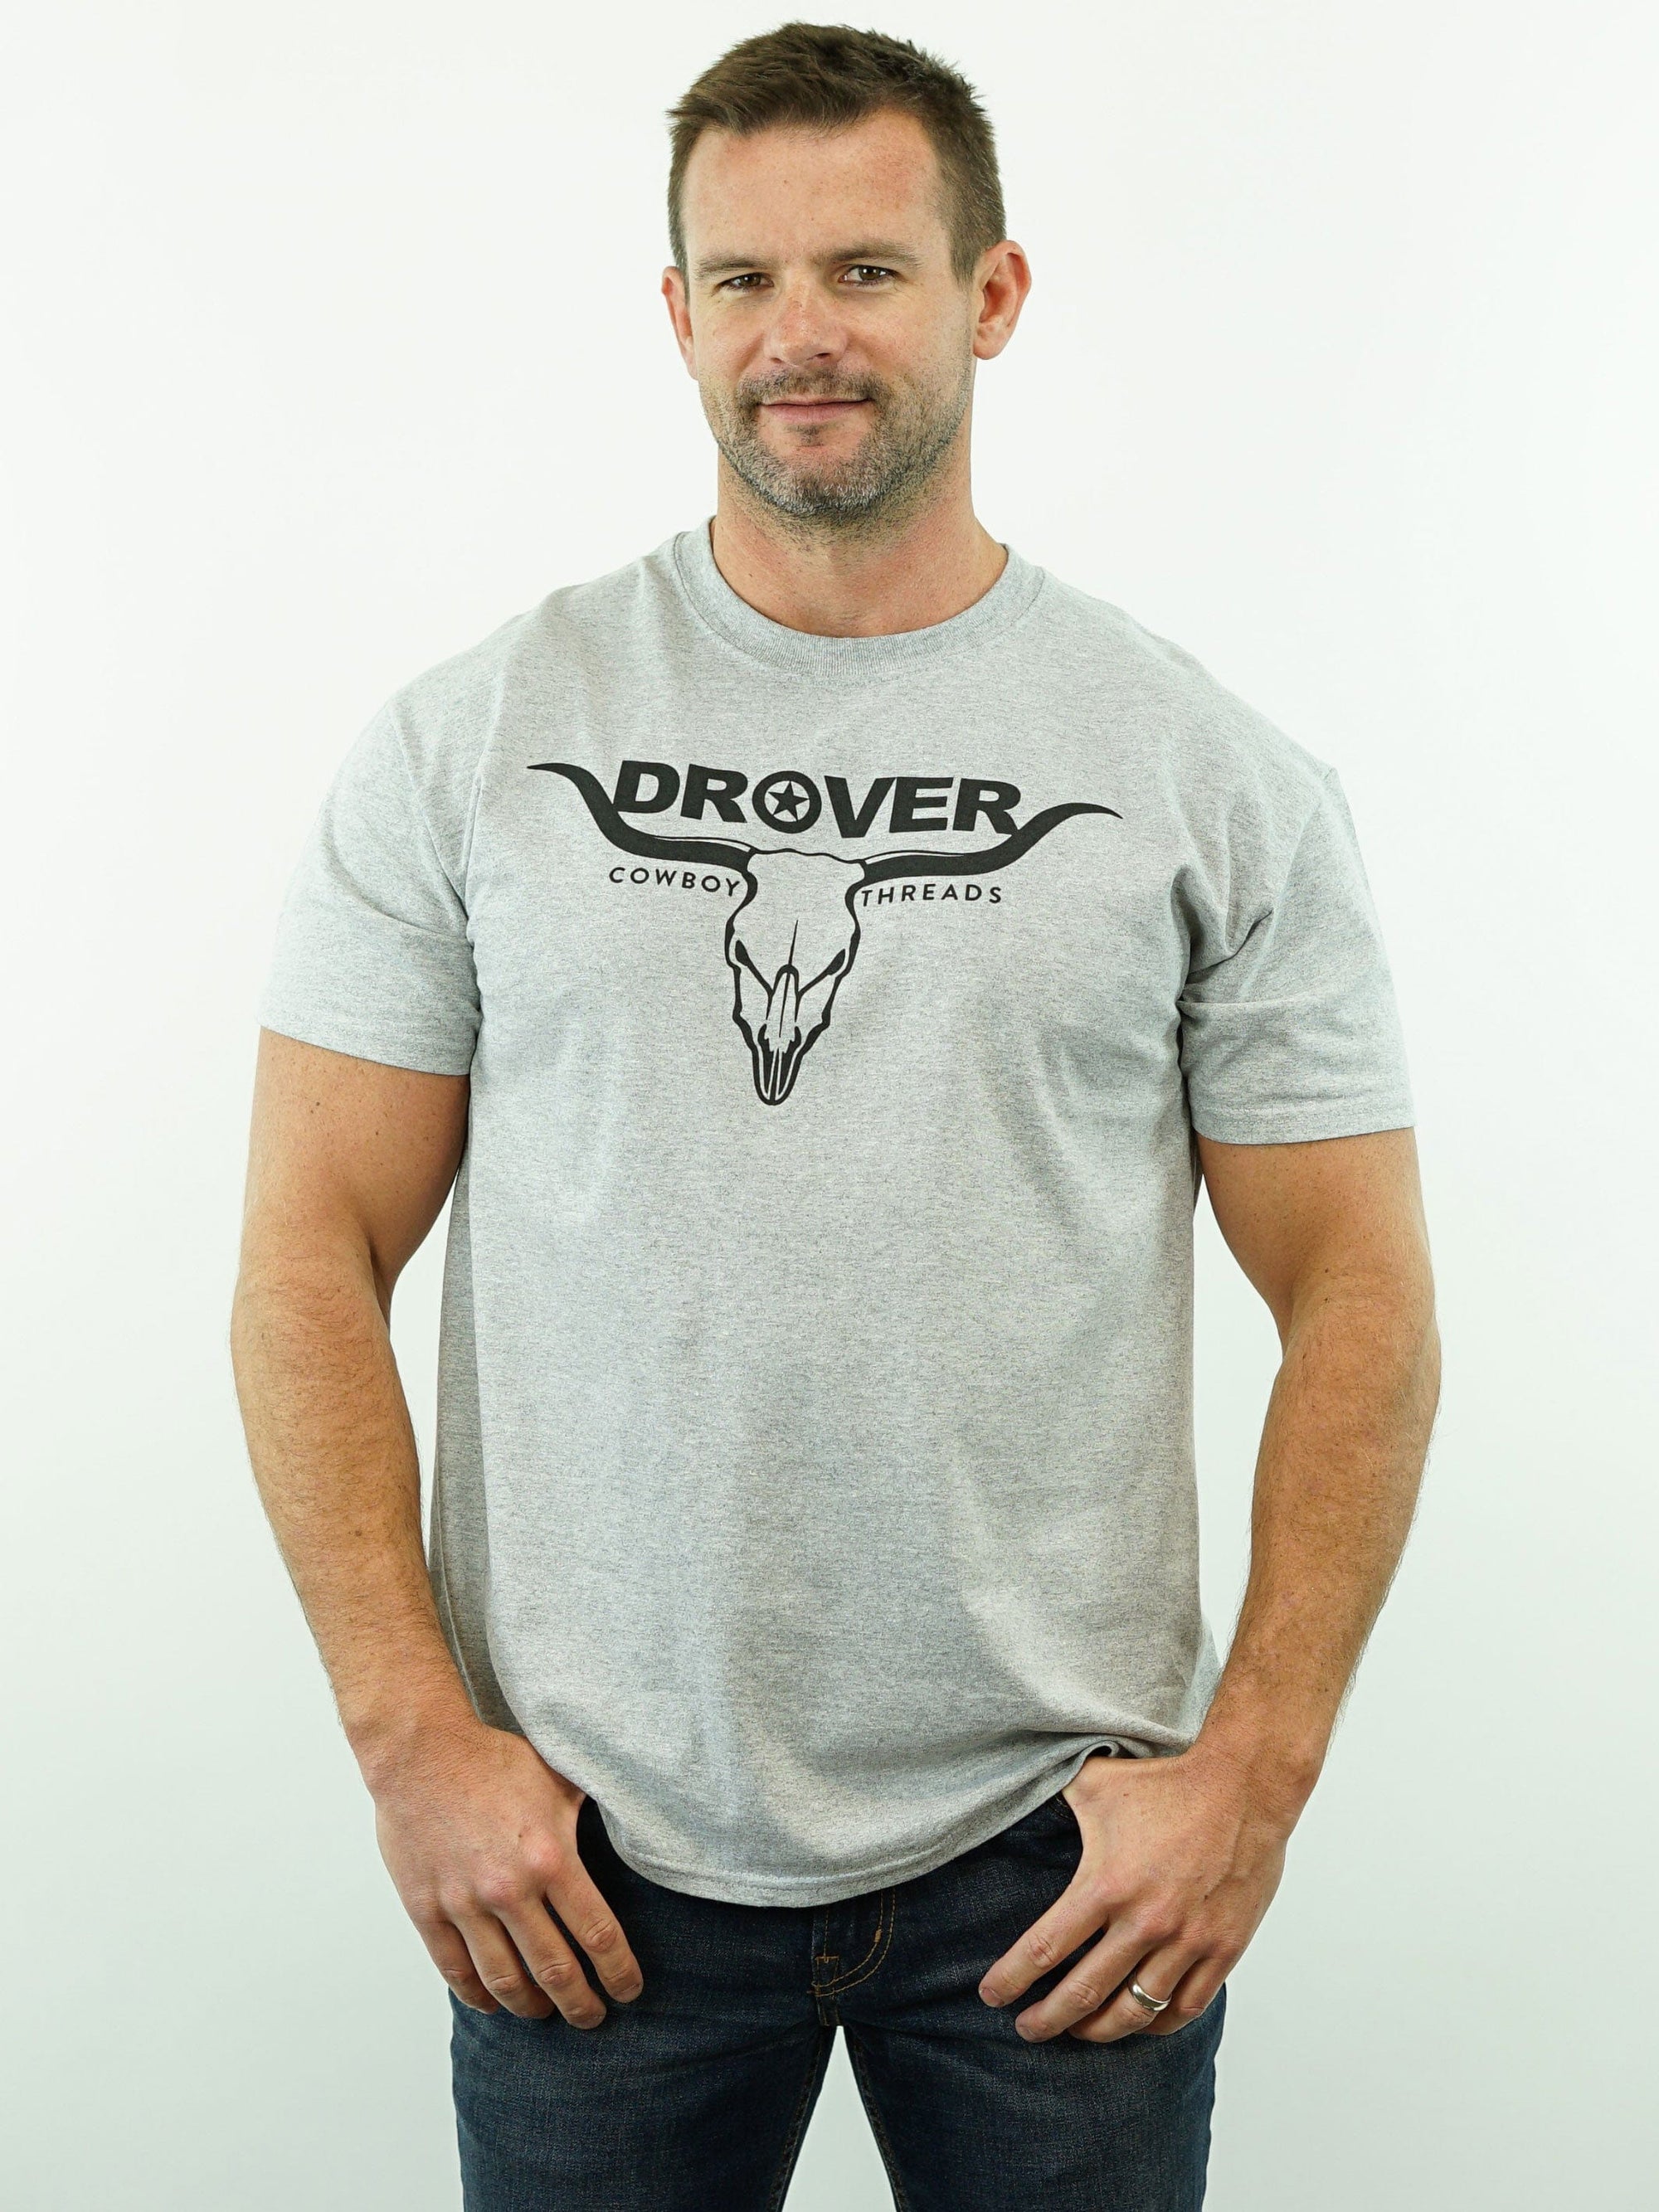 Drover Cowboy Threads Shirts T-Shirt - Drover Bull Skull - Grey Heather